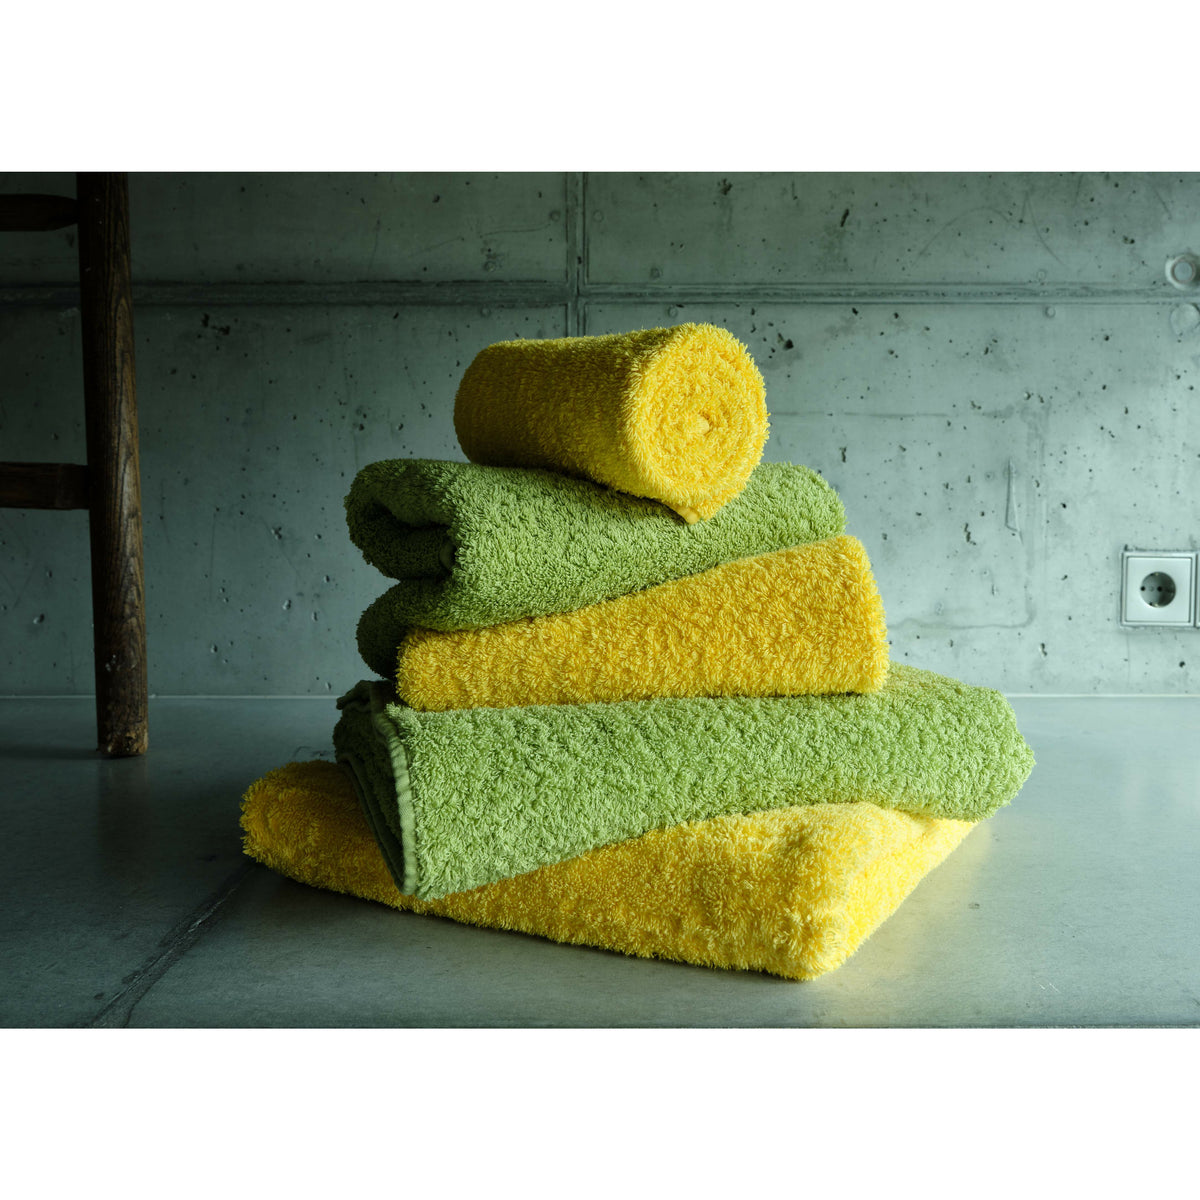 Super Absorbent 100% Cotton 54 x 27 Hotel Beach Bath Towels green, 1 unit -  Foods Co.